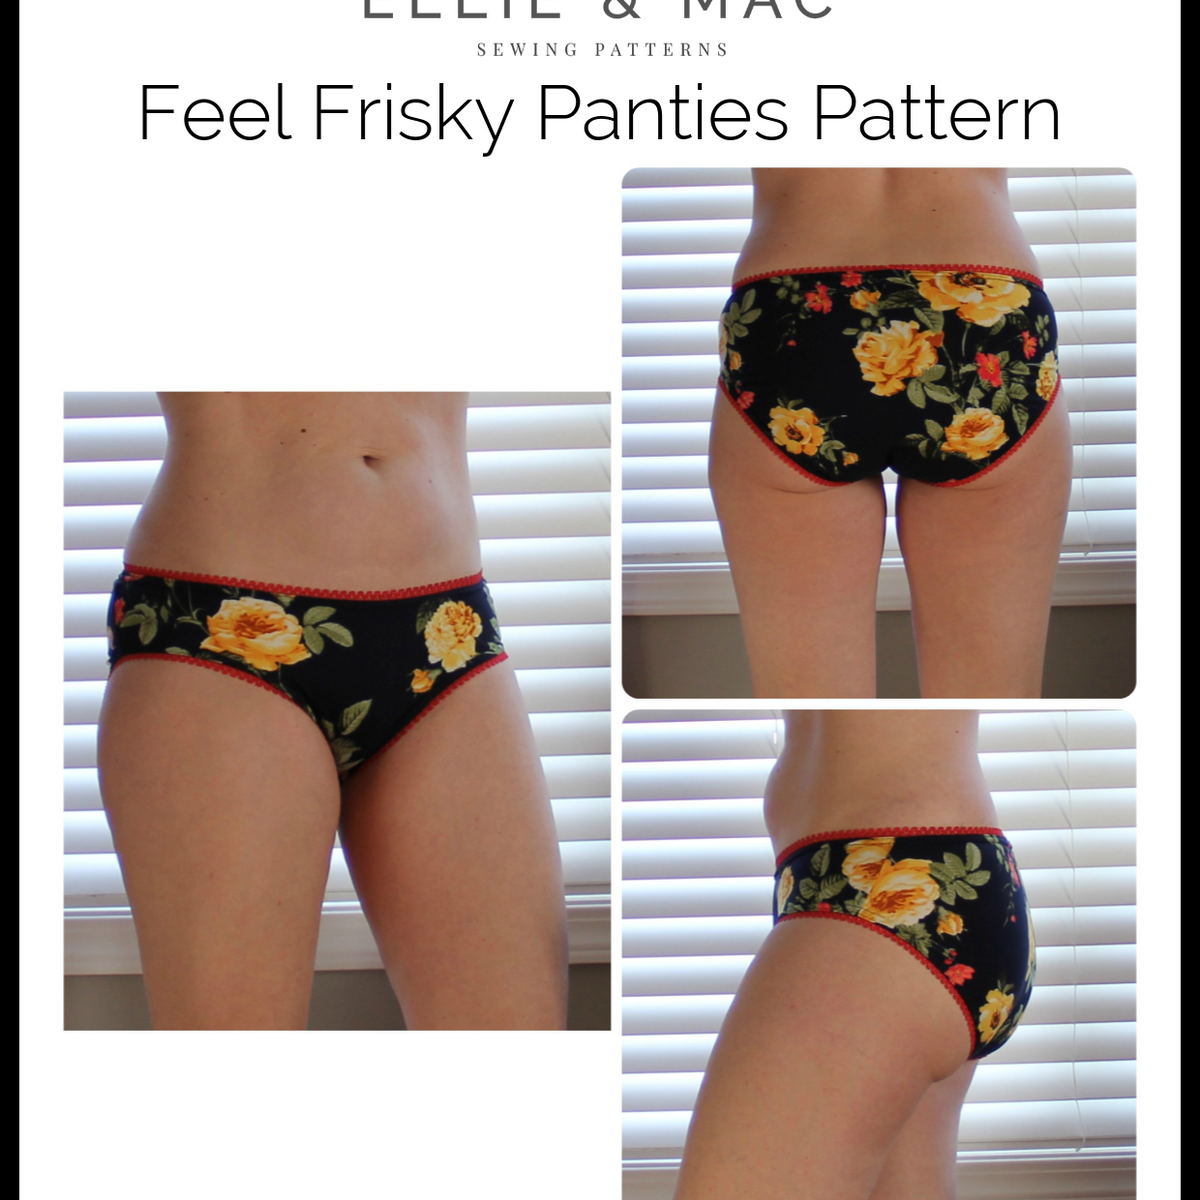 Feel Frisky Panties Pattern